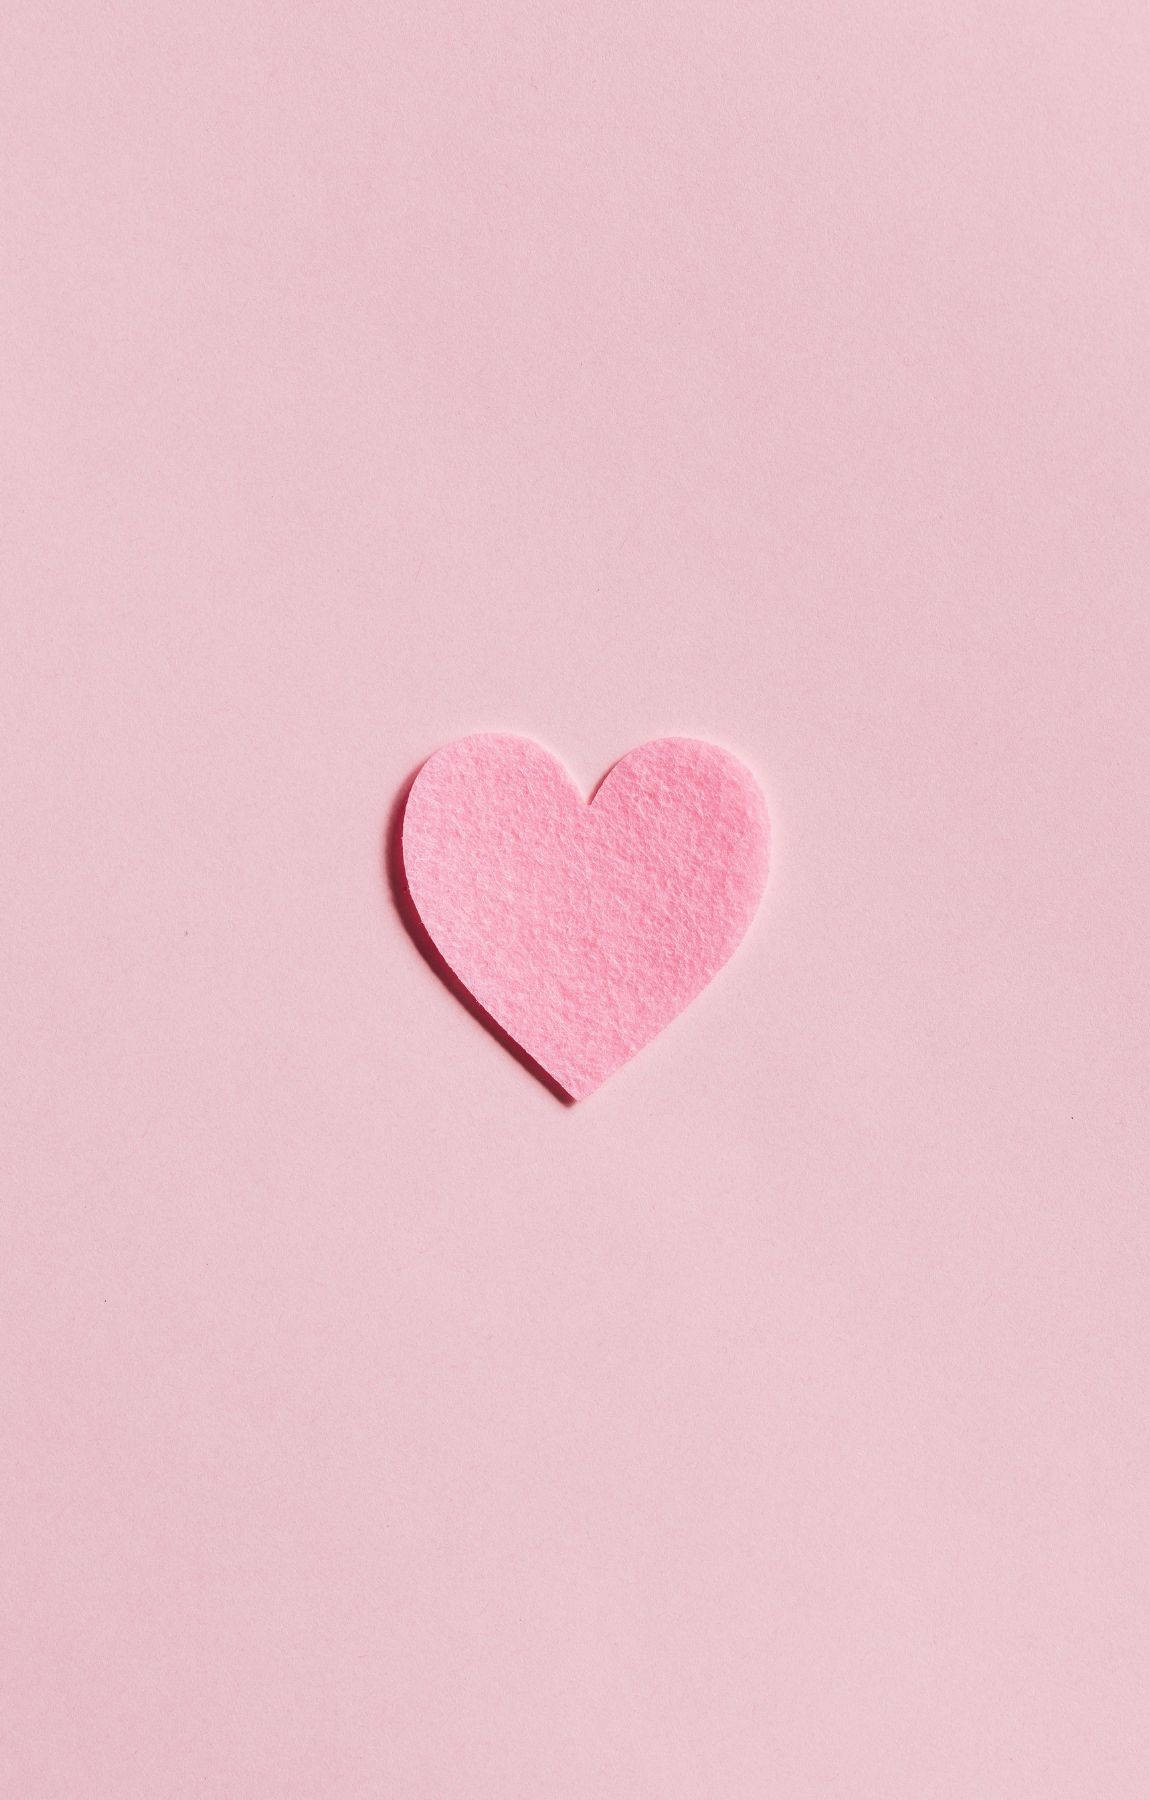 Minimalist Baby Pink Heart Wallpaper